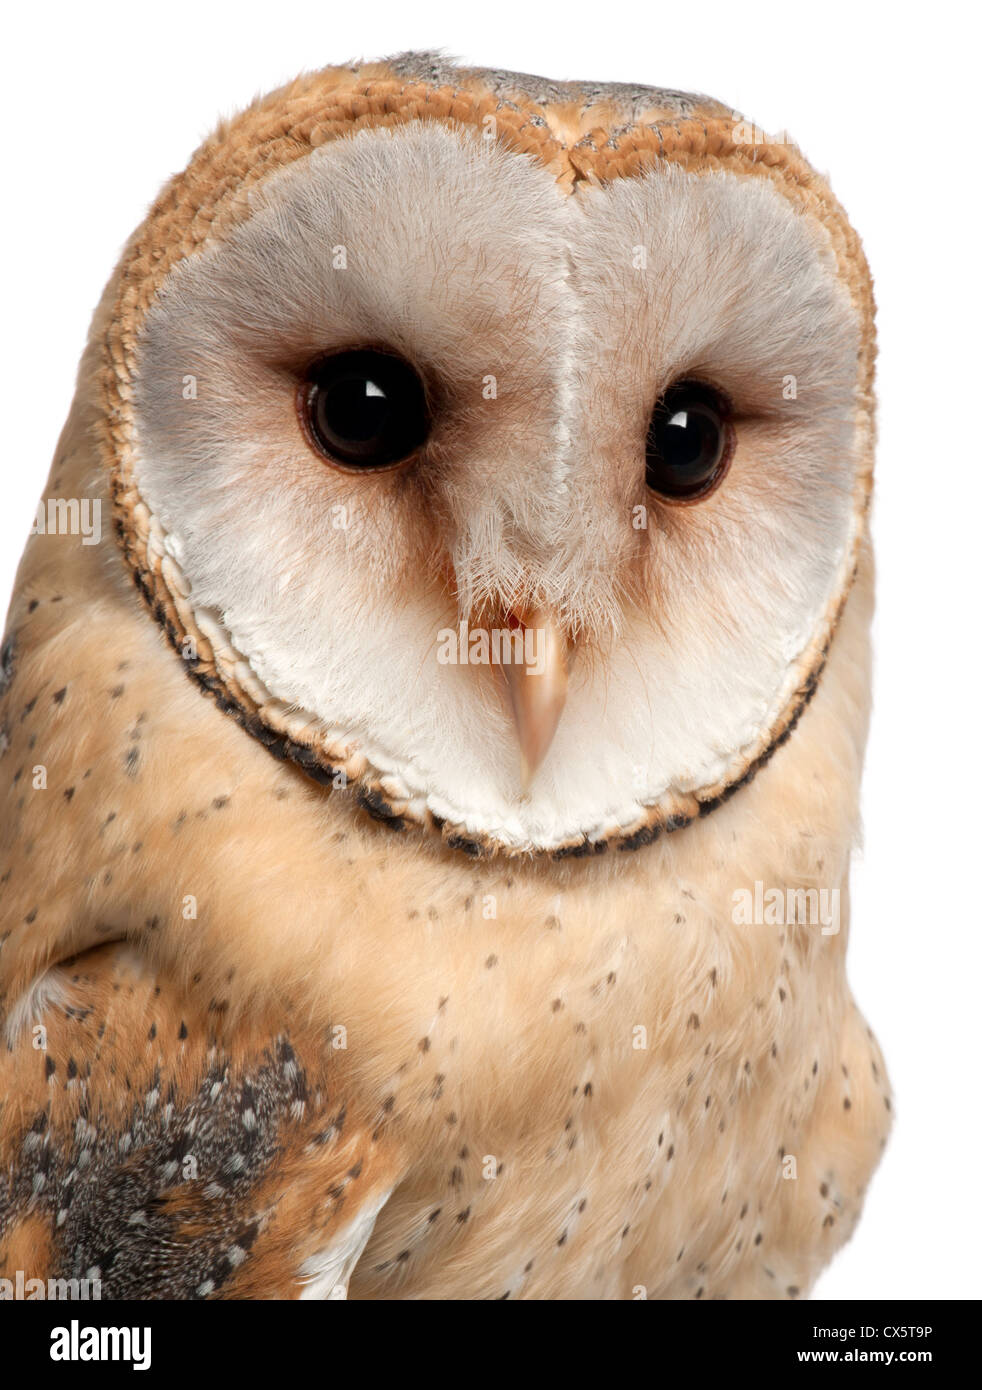 Barn Owl,Tyto alba, 4 months old, portrait against white background Stock Photo